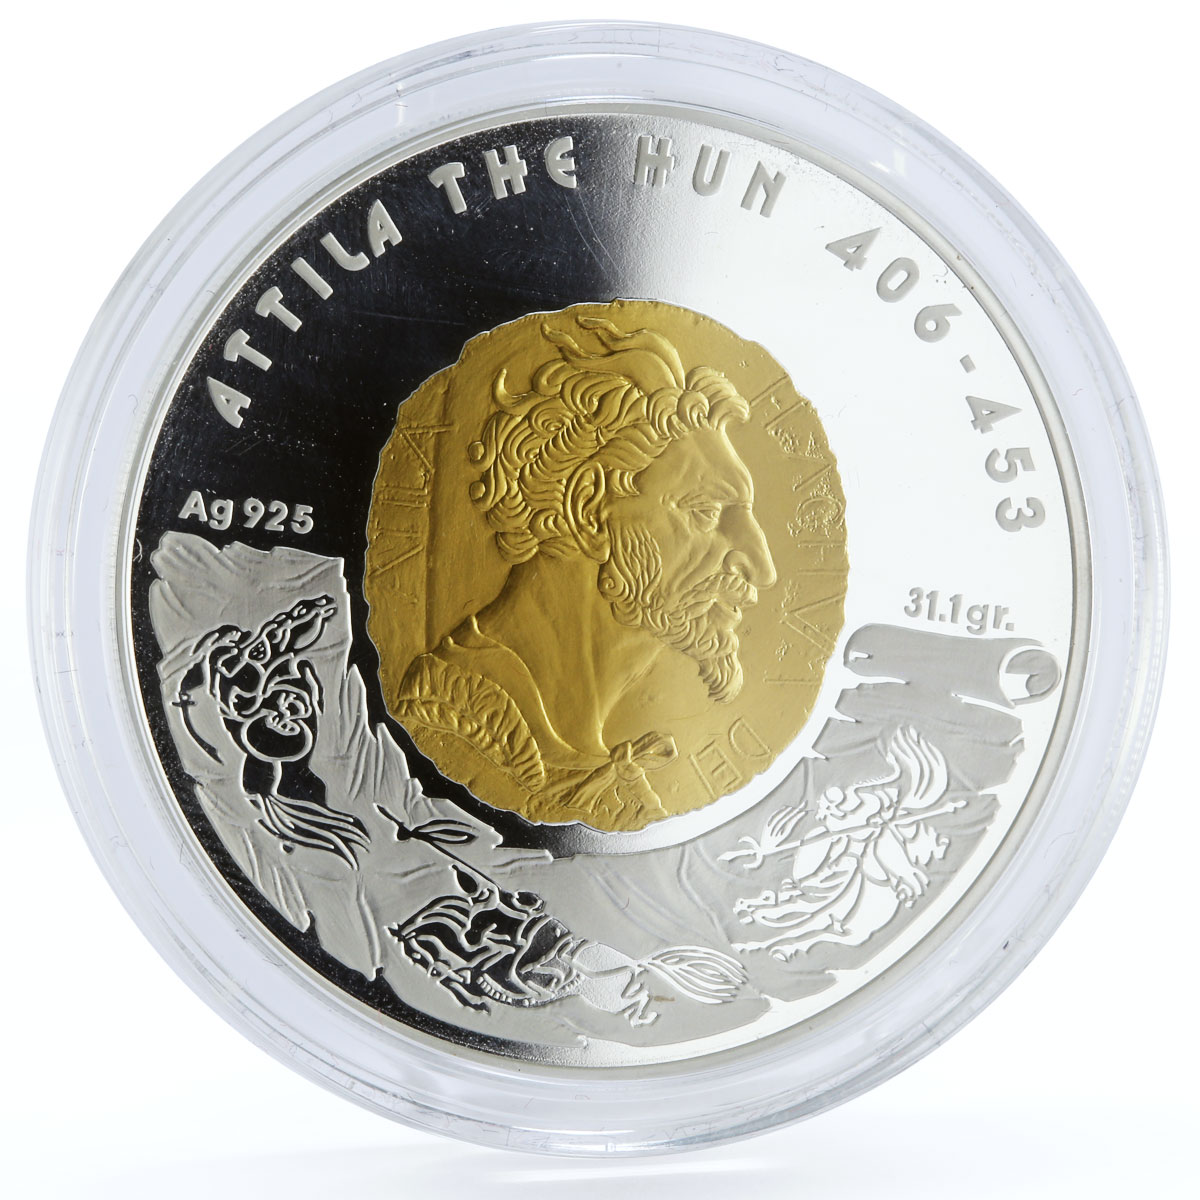 Kazakhstan 100 tenge Great Commanders Attila The Hun proof silver coin 2009